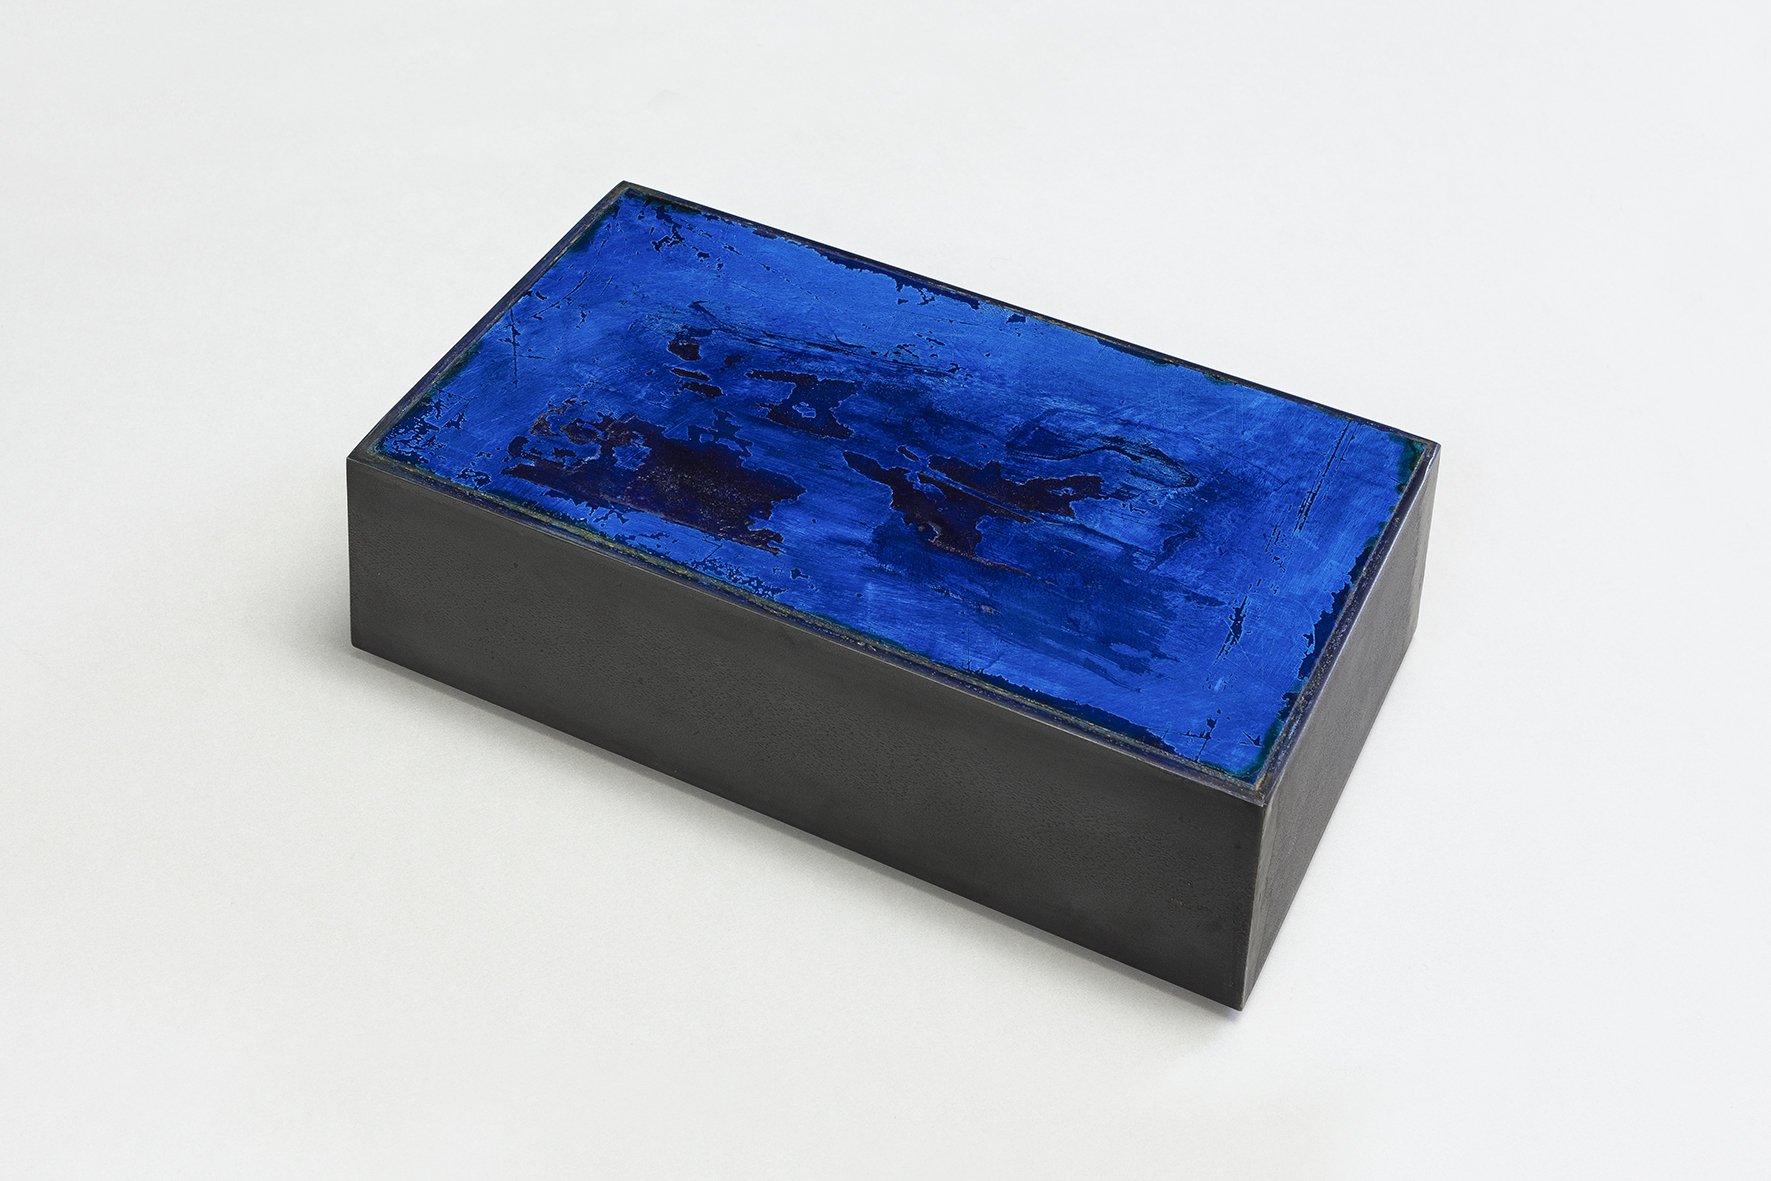  Floor Frescos, Blaue Stunde series, 2019 Ink on Alabaster plaster, mortar, metal frame 36 x 21 x 10 cm 